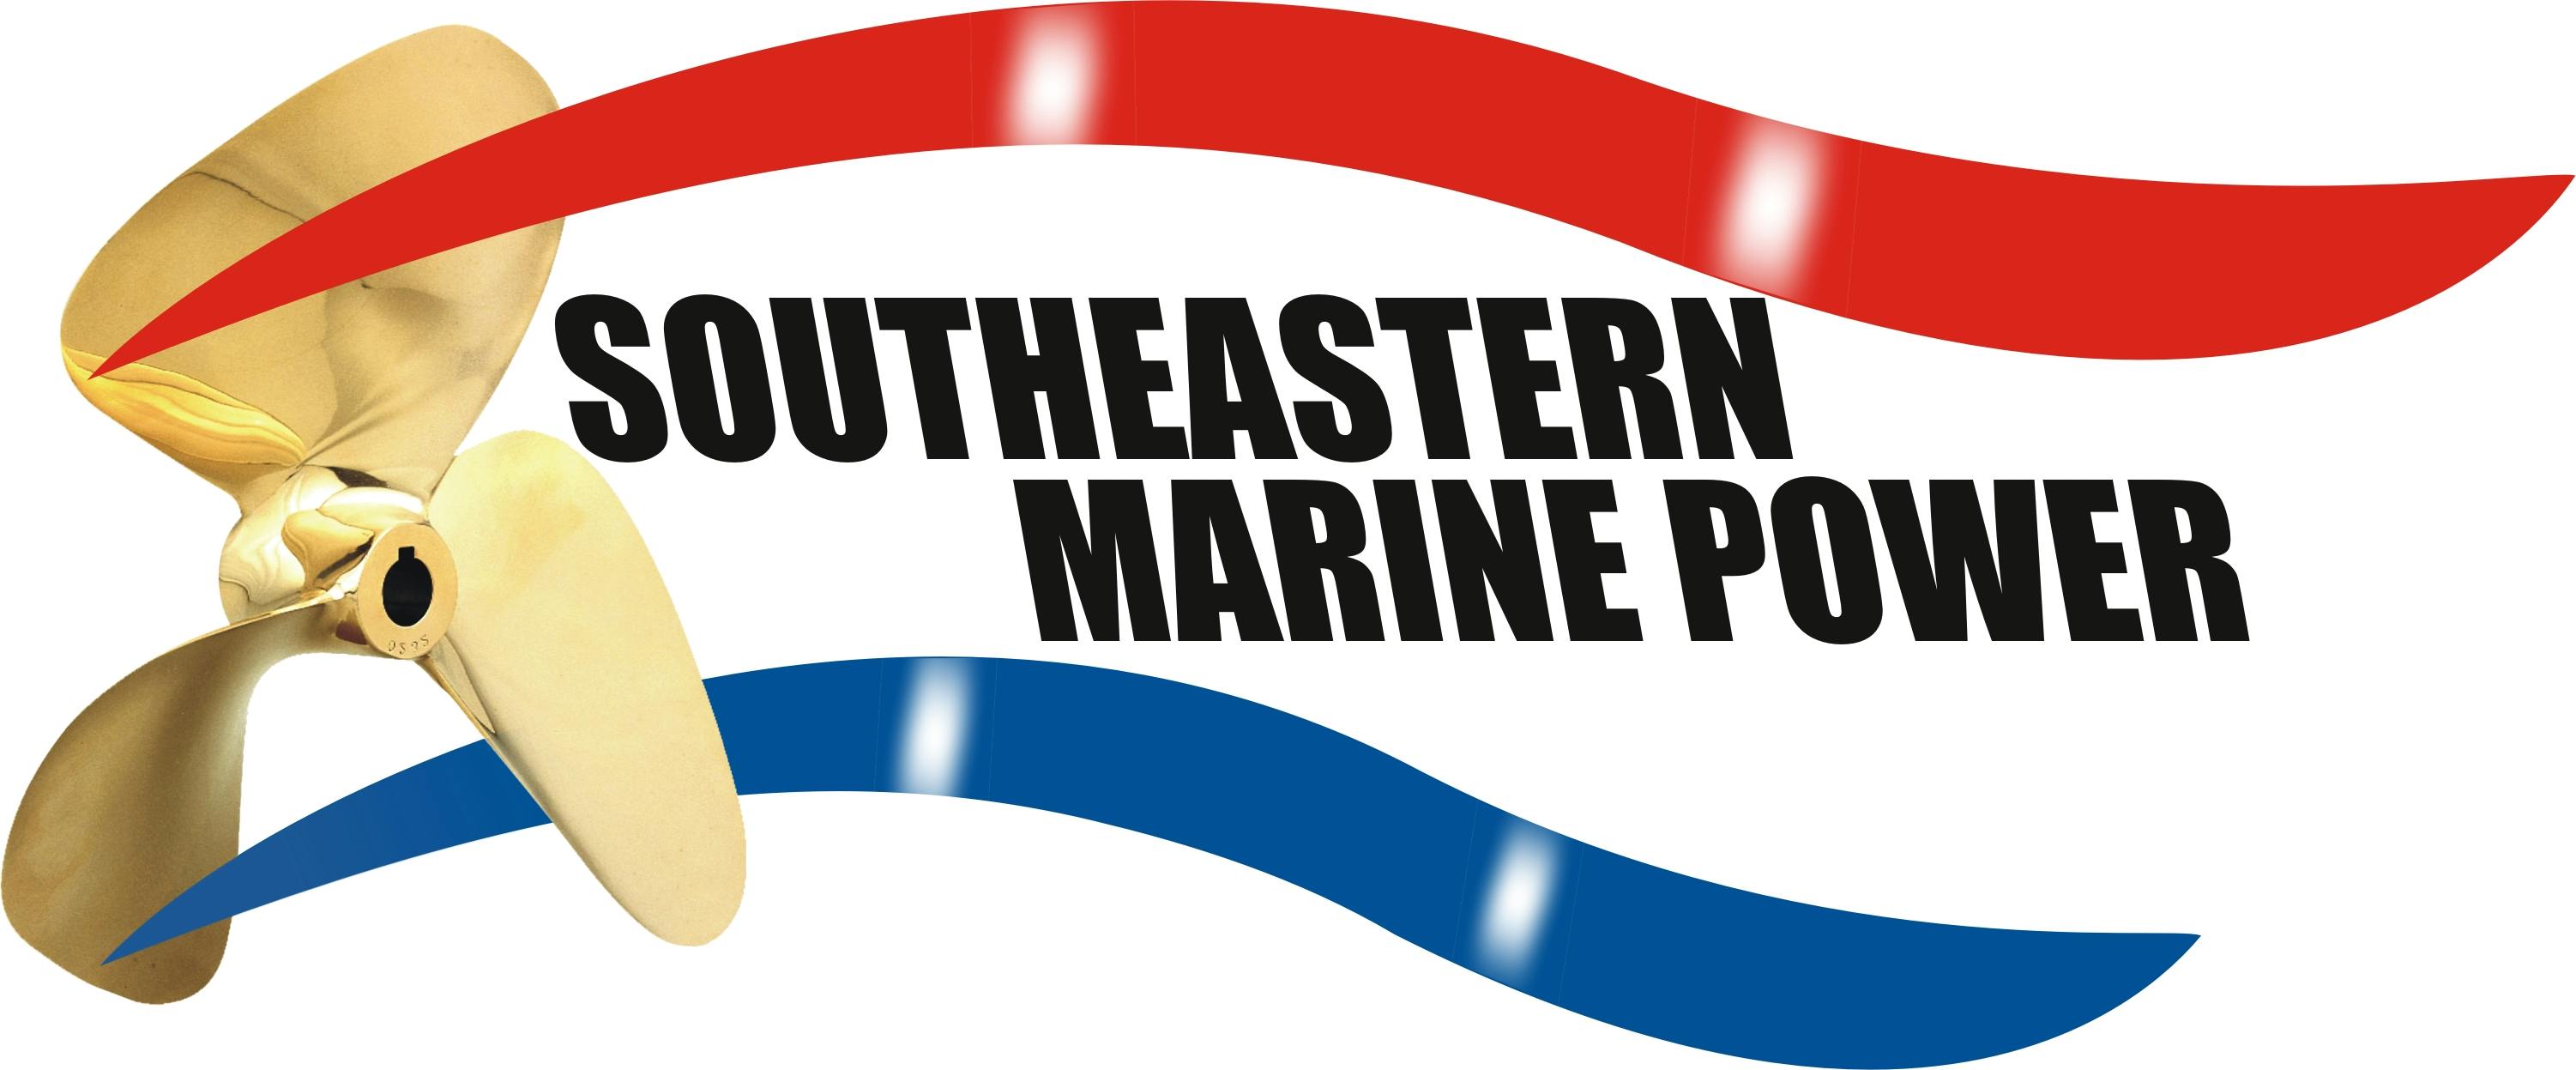 Company logo for 'Southeastern Marine Power'.